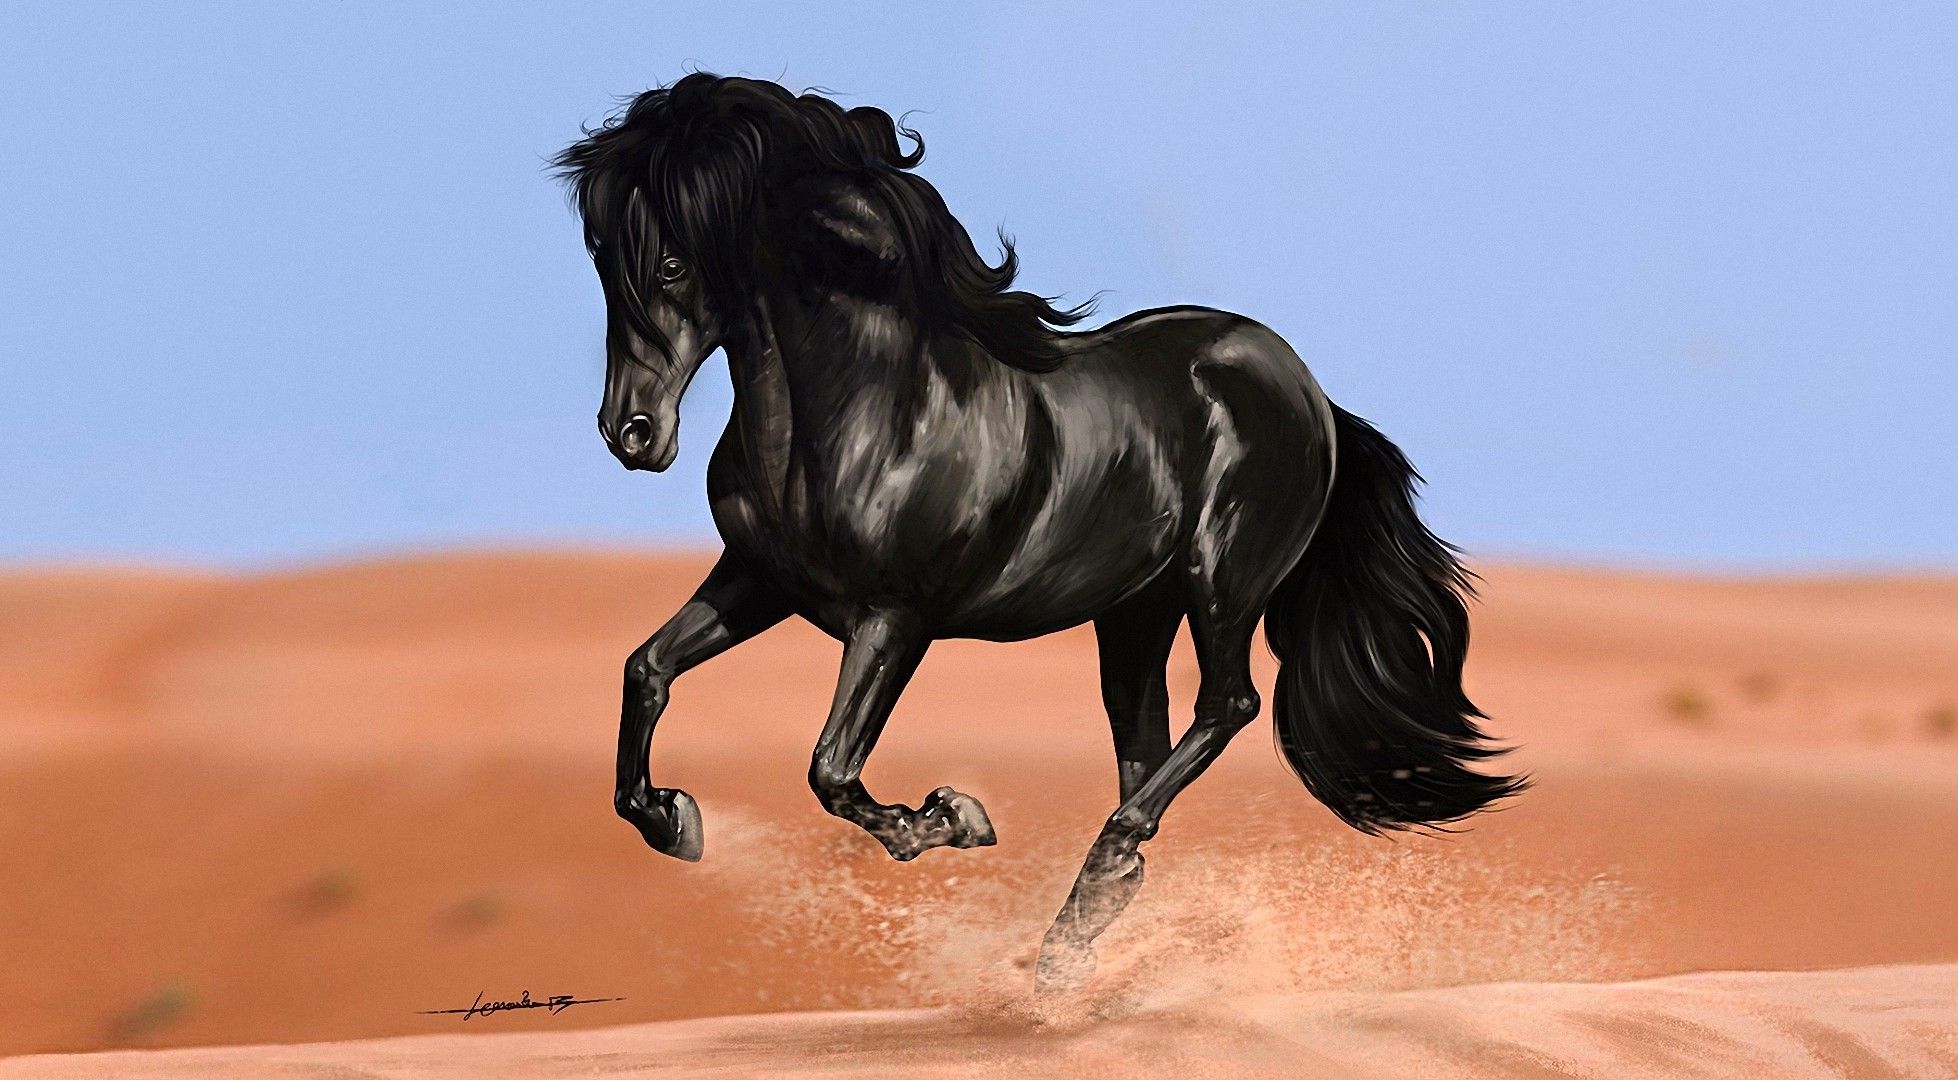 Full HD, Pets Painting, Paintings, HD Wallpaper, Animals, Horse